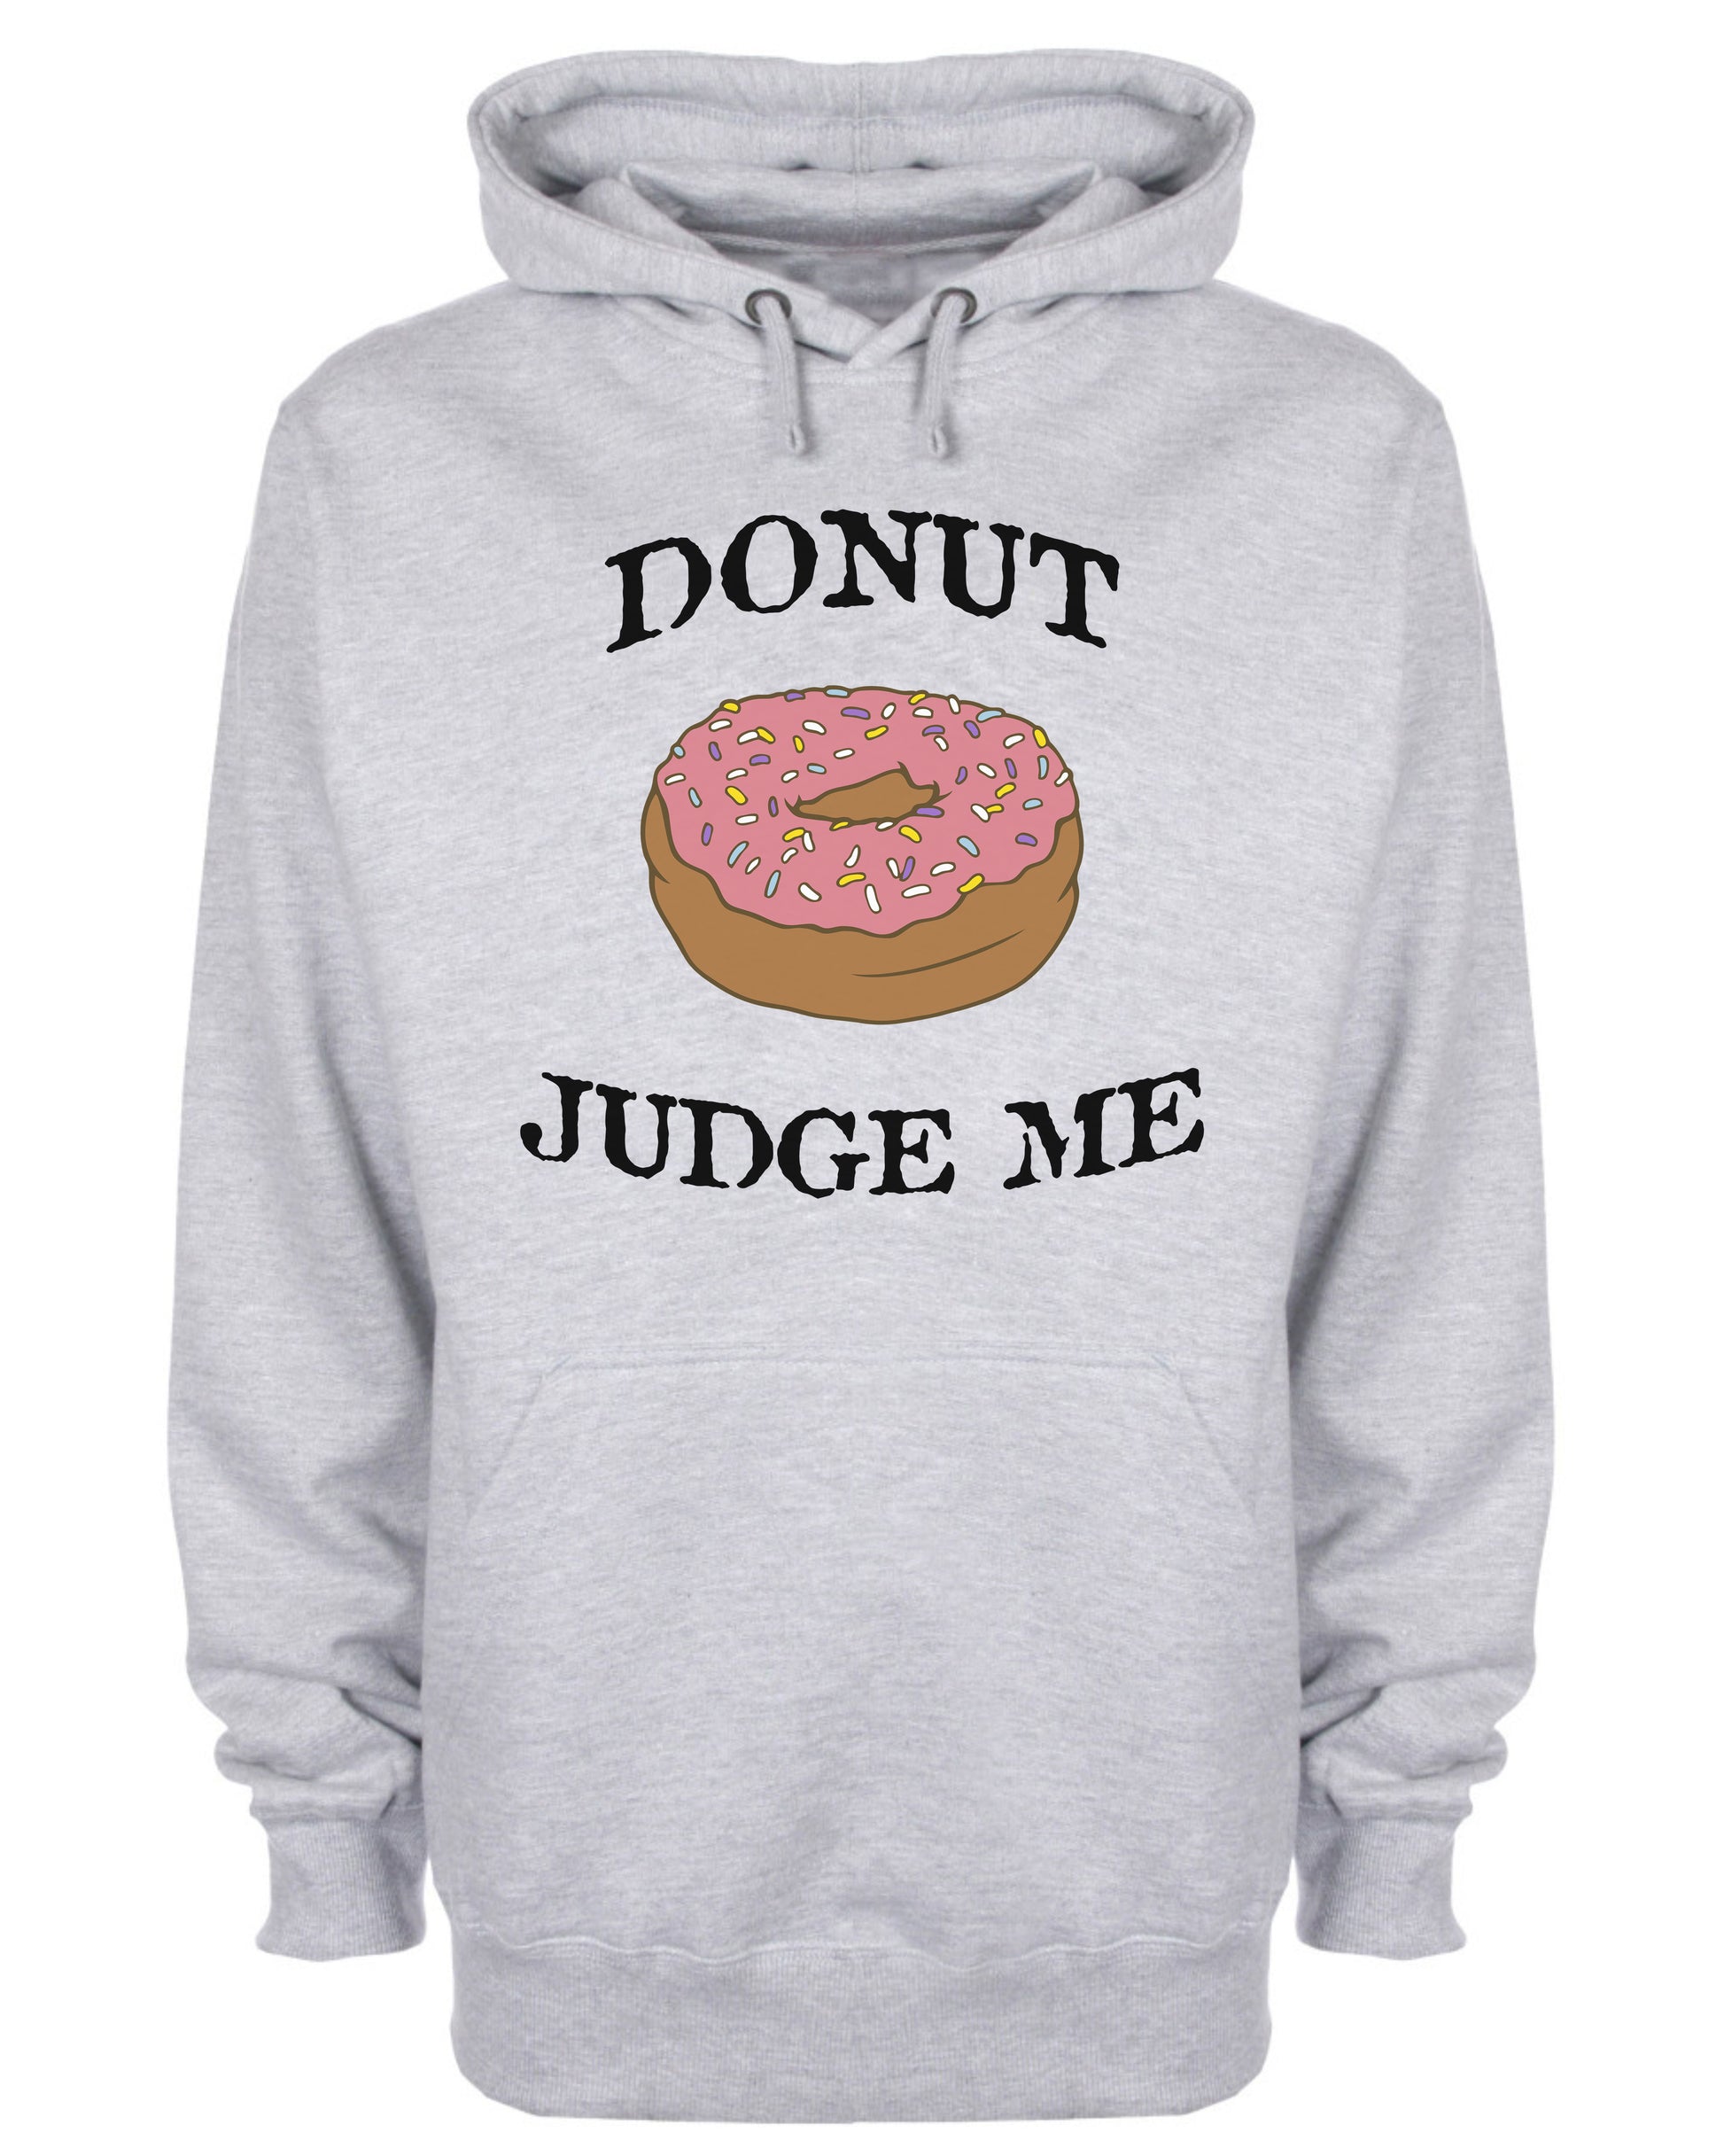 Don't Judge Me Donut Funny Slogan Hoodie